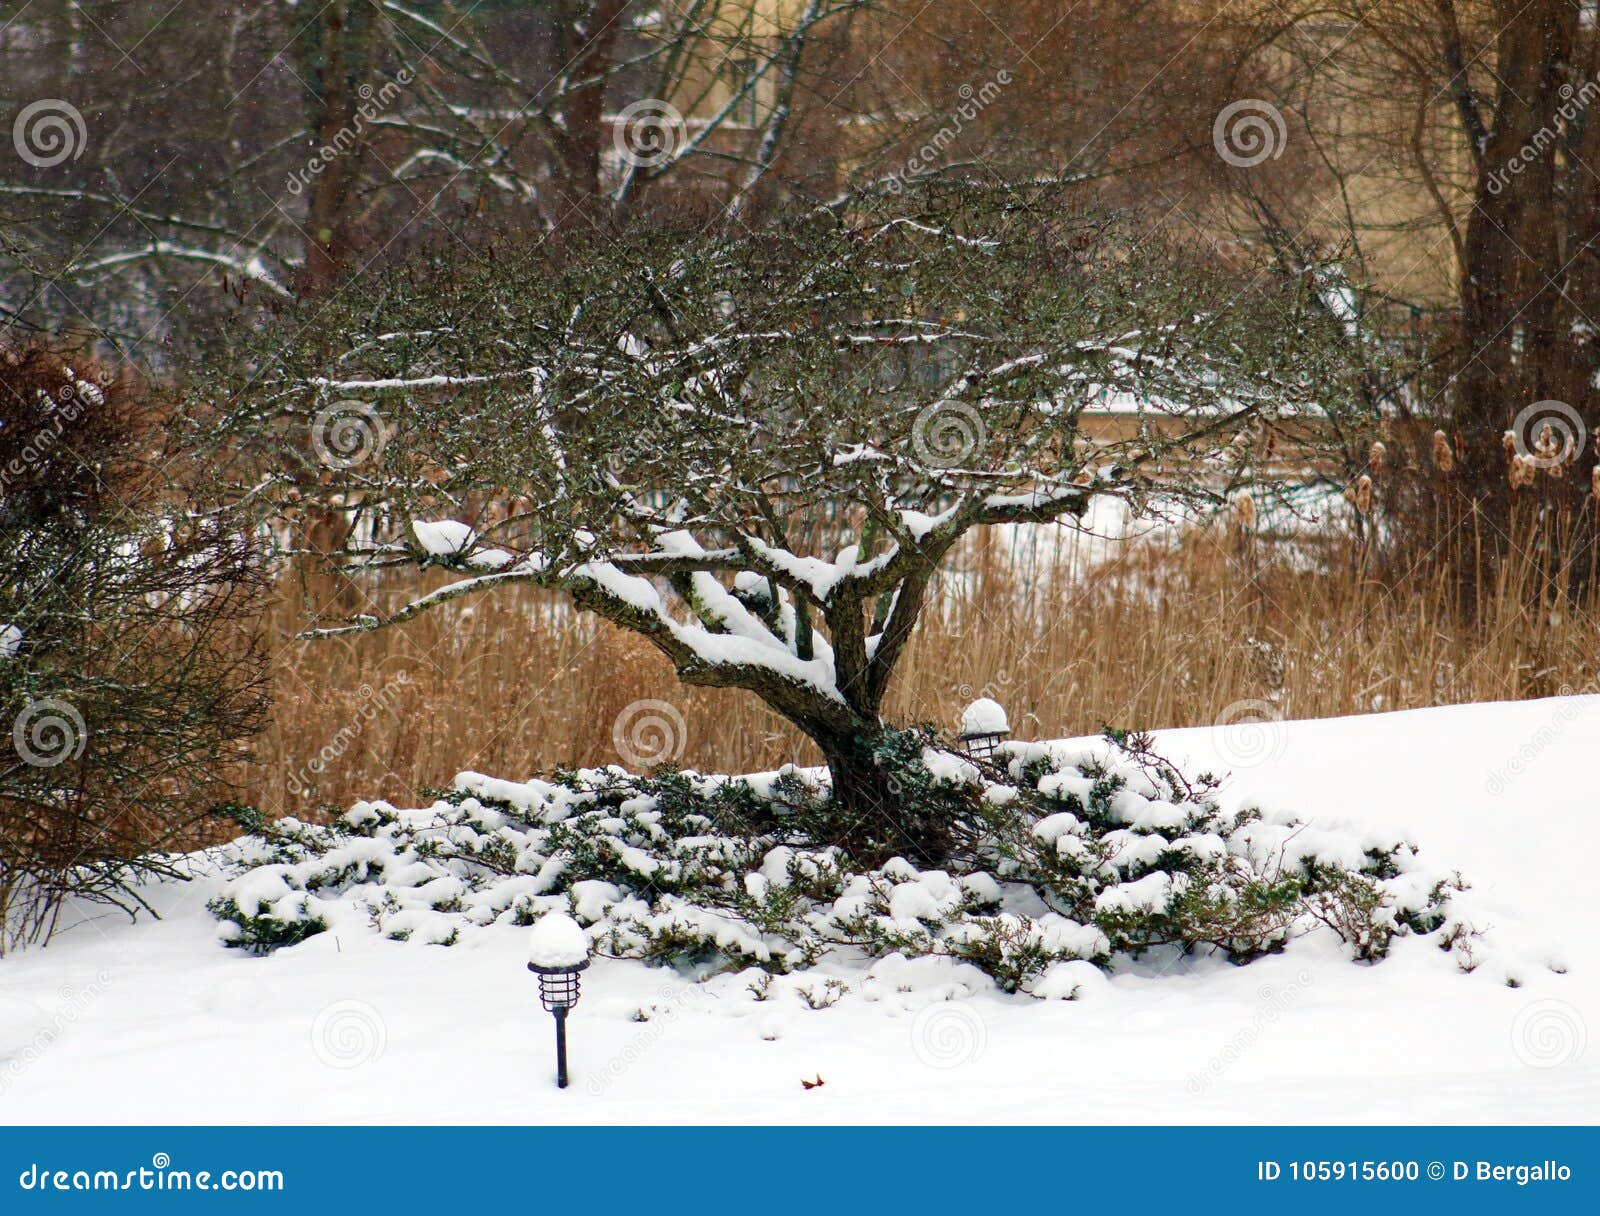 tree under white snow during winter in michigan